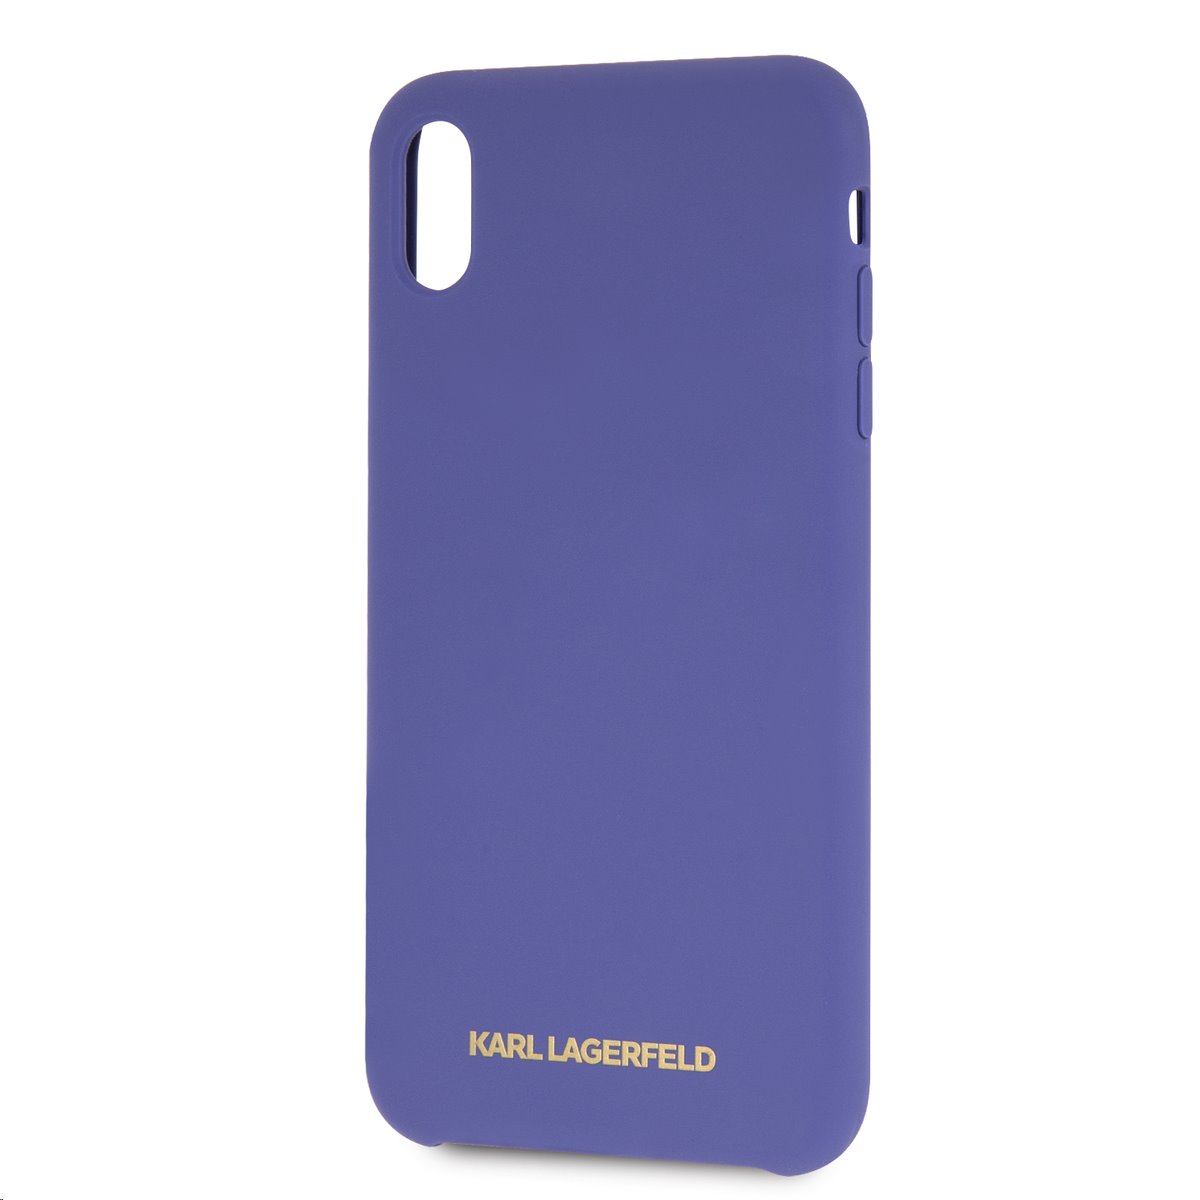 Silikonové pouzdro Karl Lagerfeld Gold Logo Silicone Case iPhone XS Max,violet